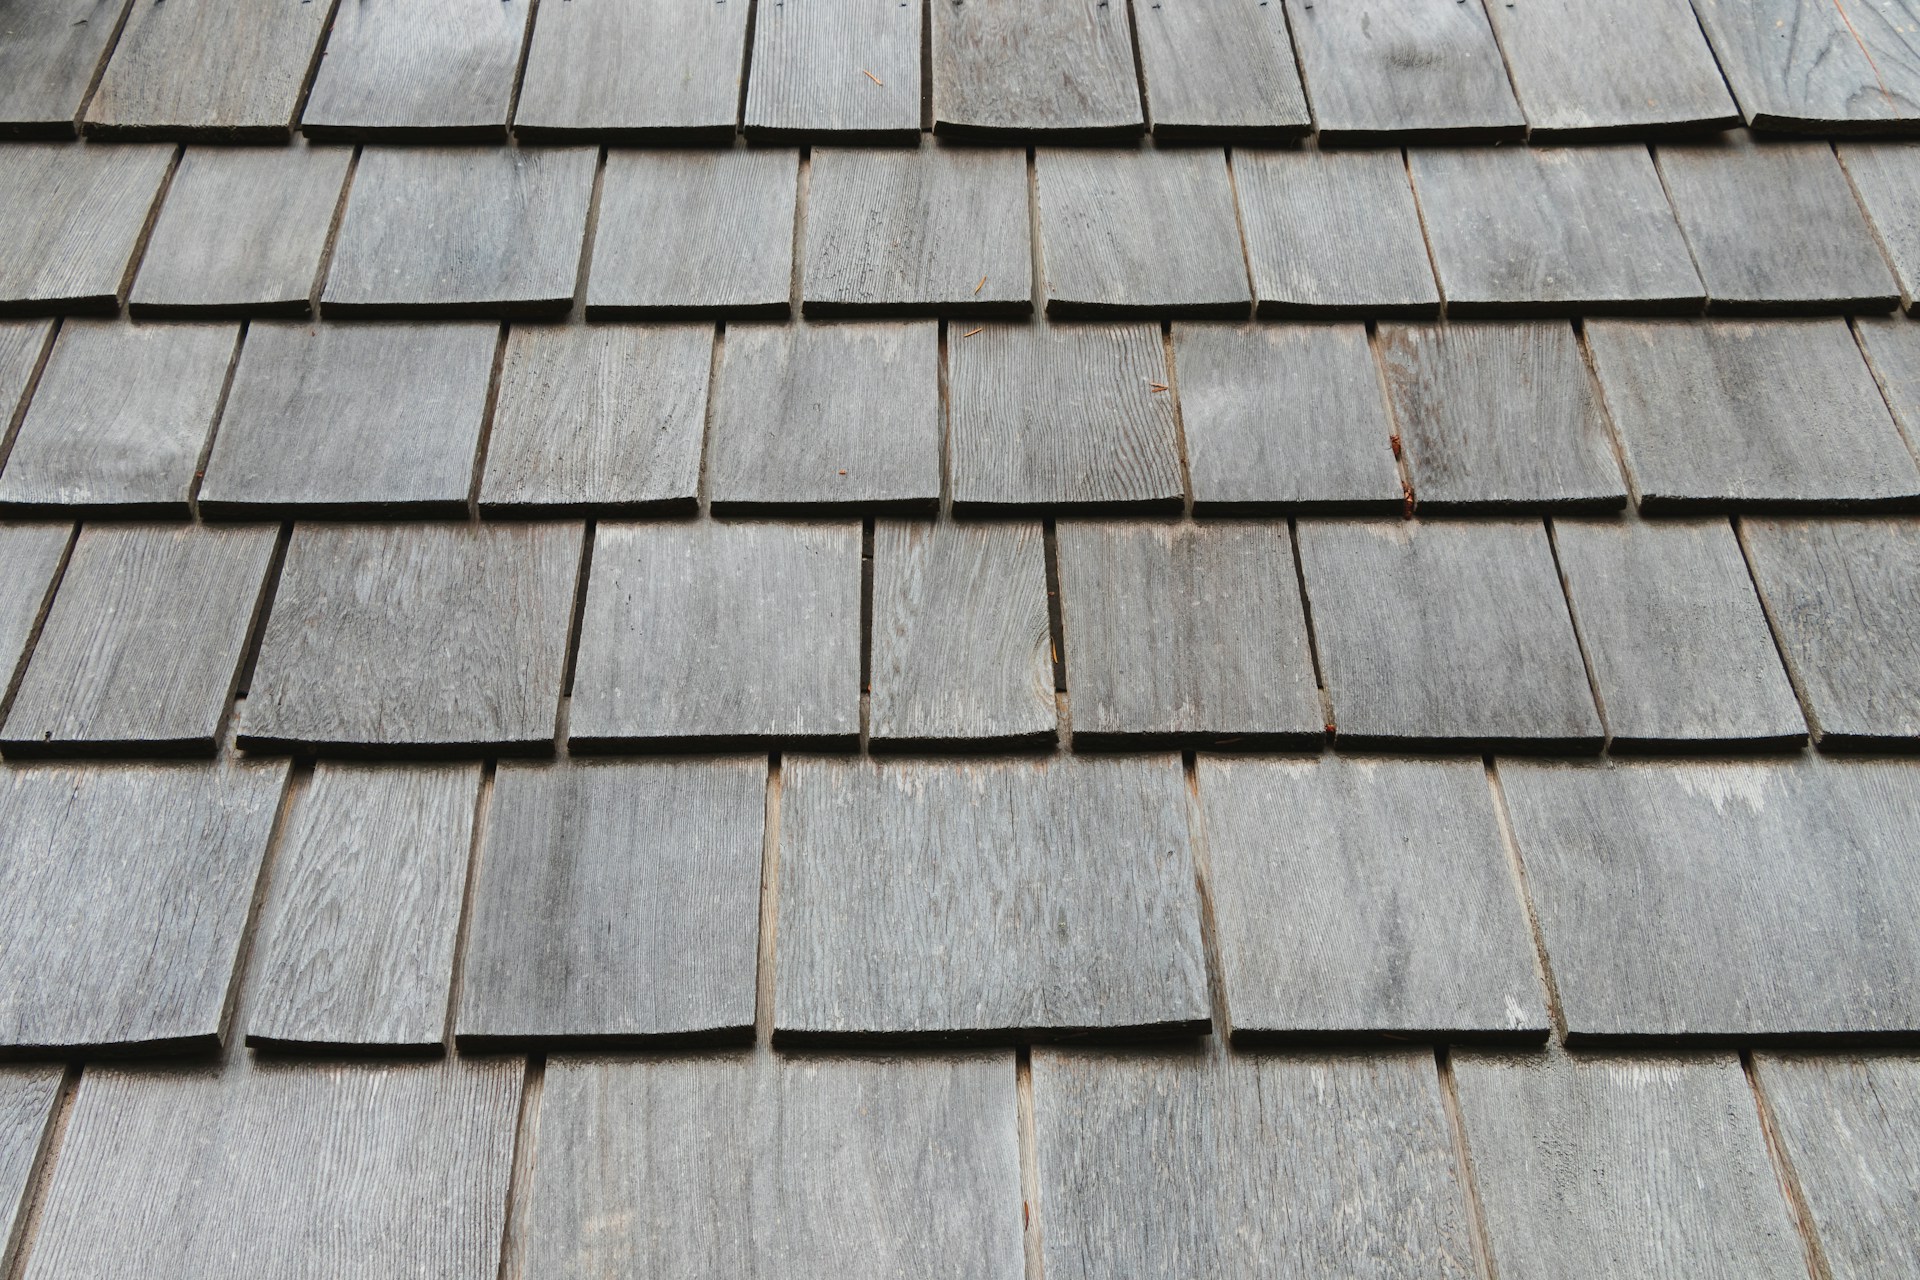 wood shake shingles on roof